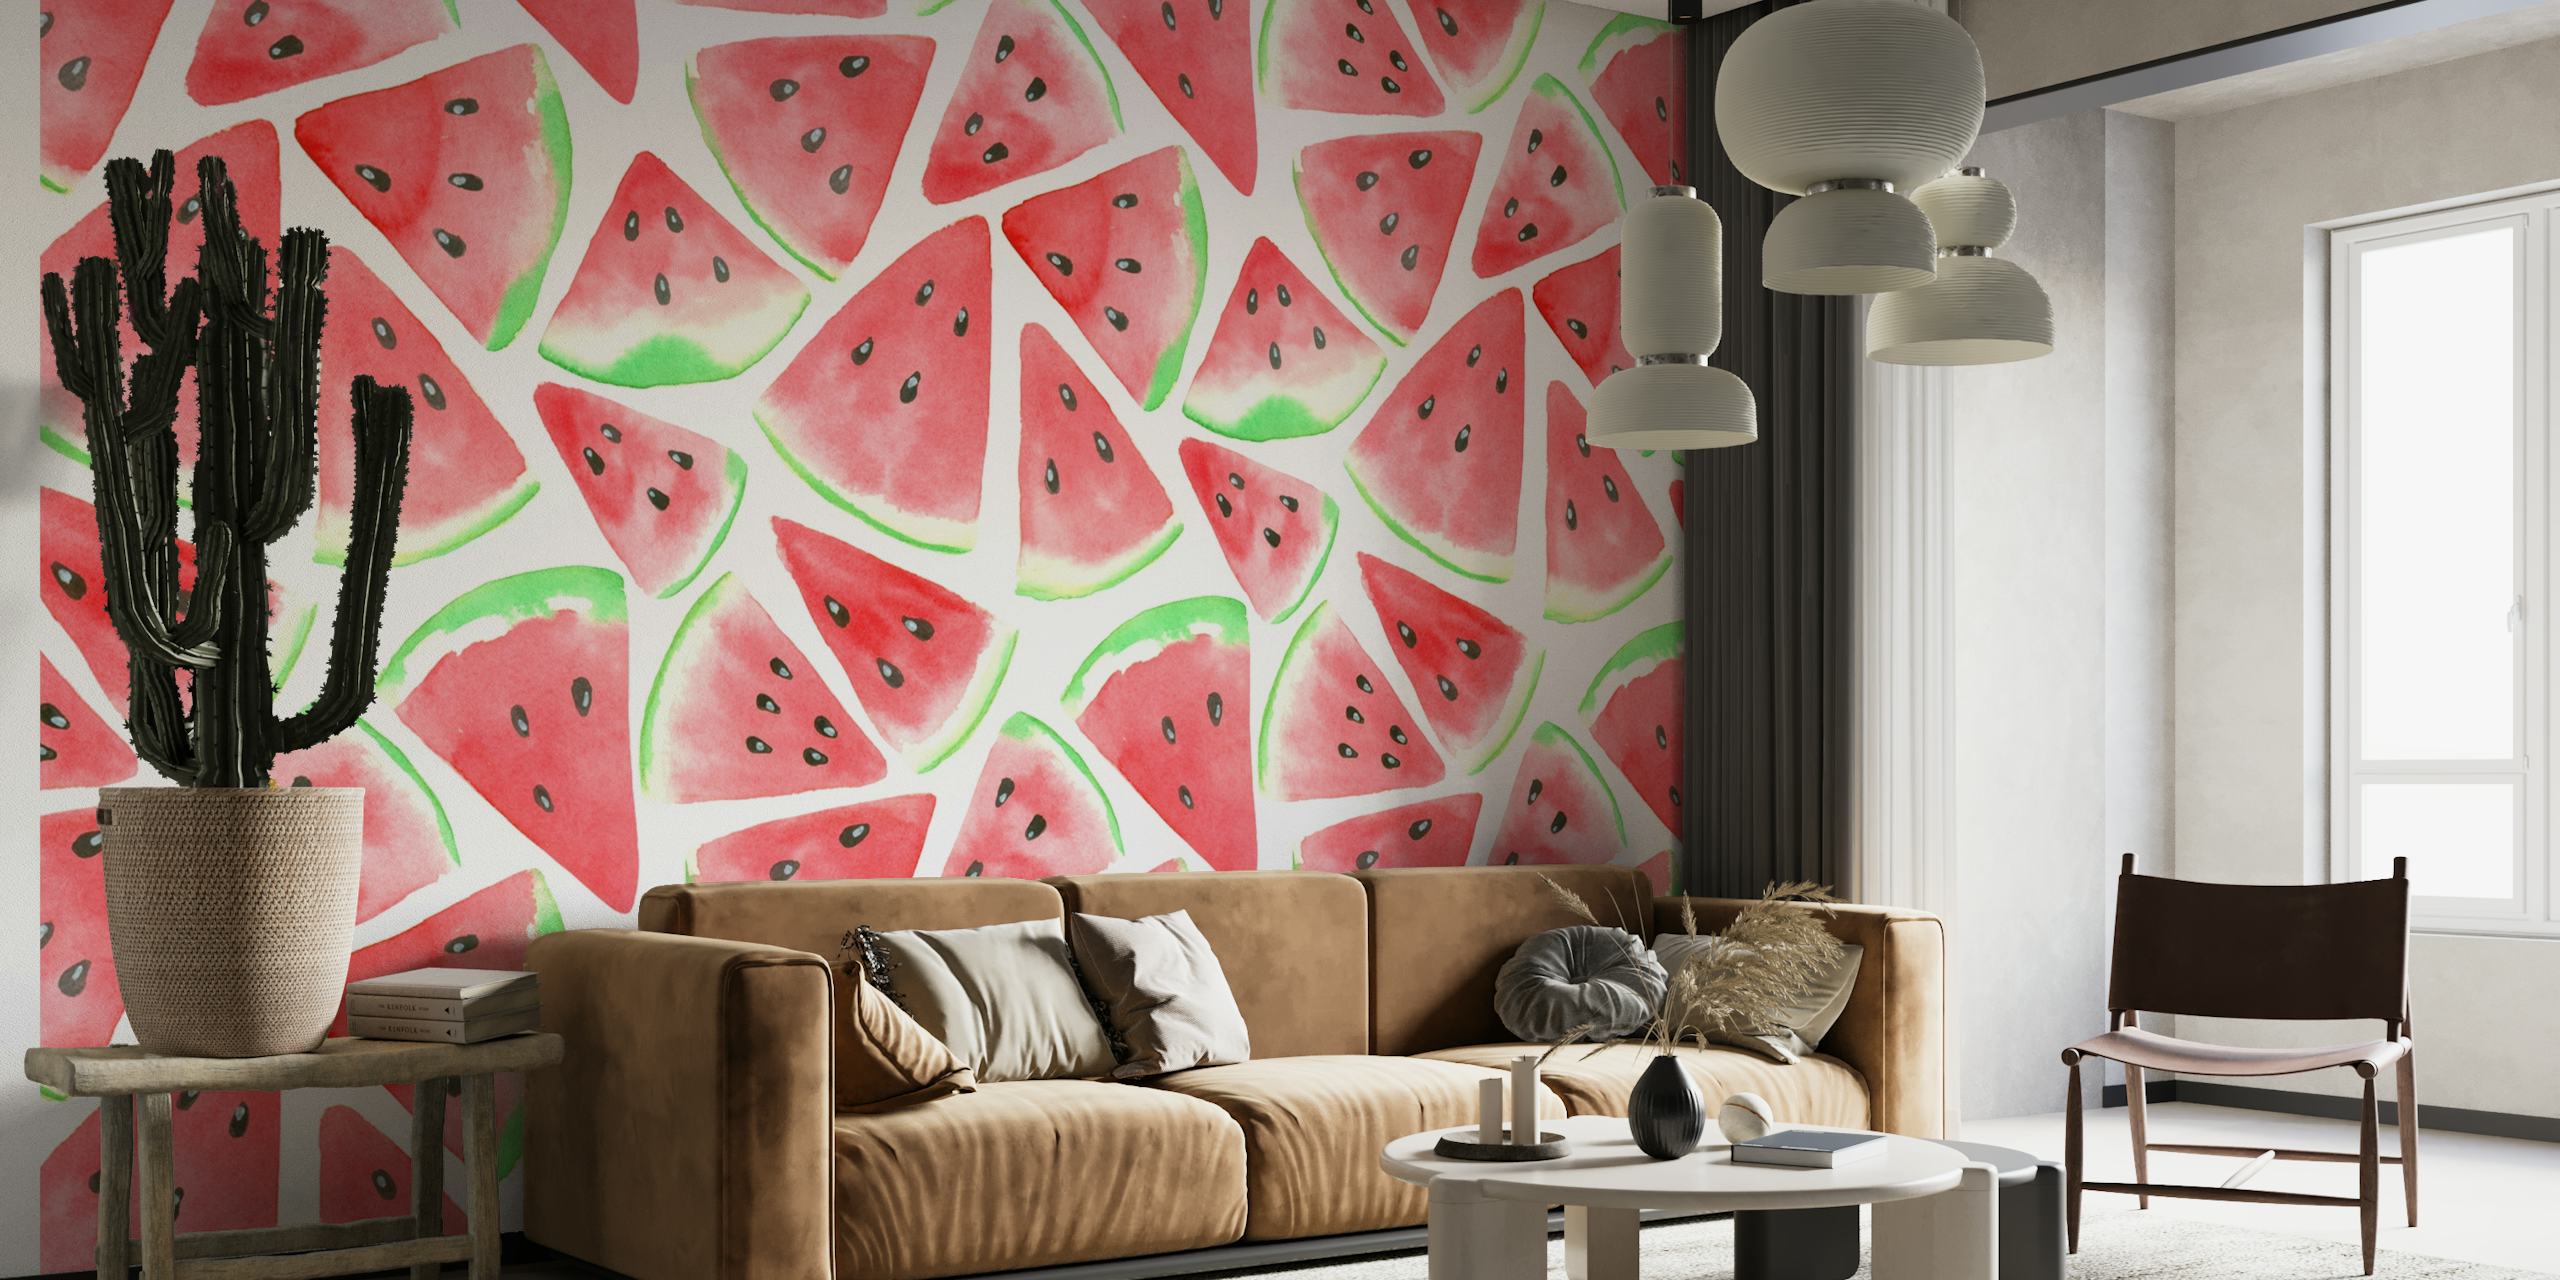 Watermelon slices 2 papel pintado